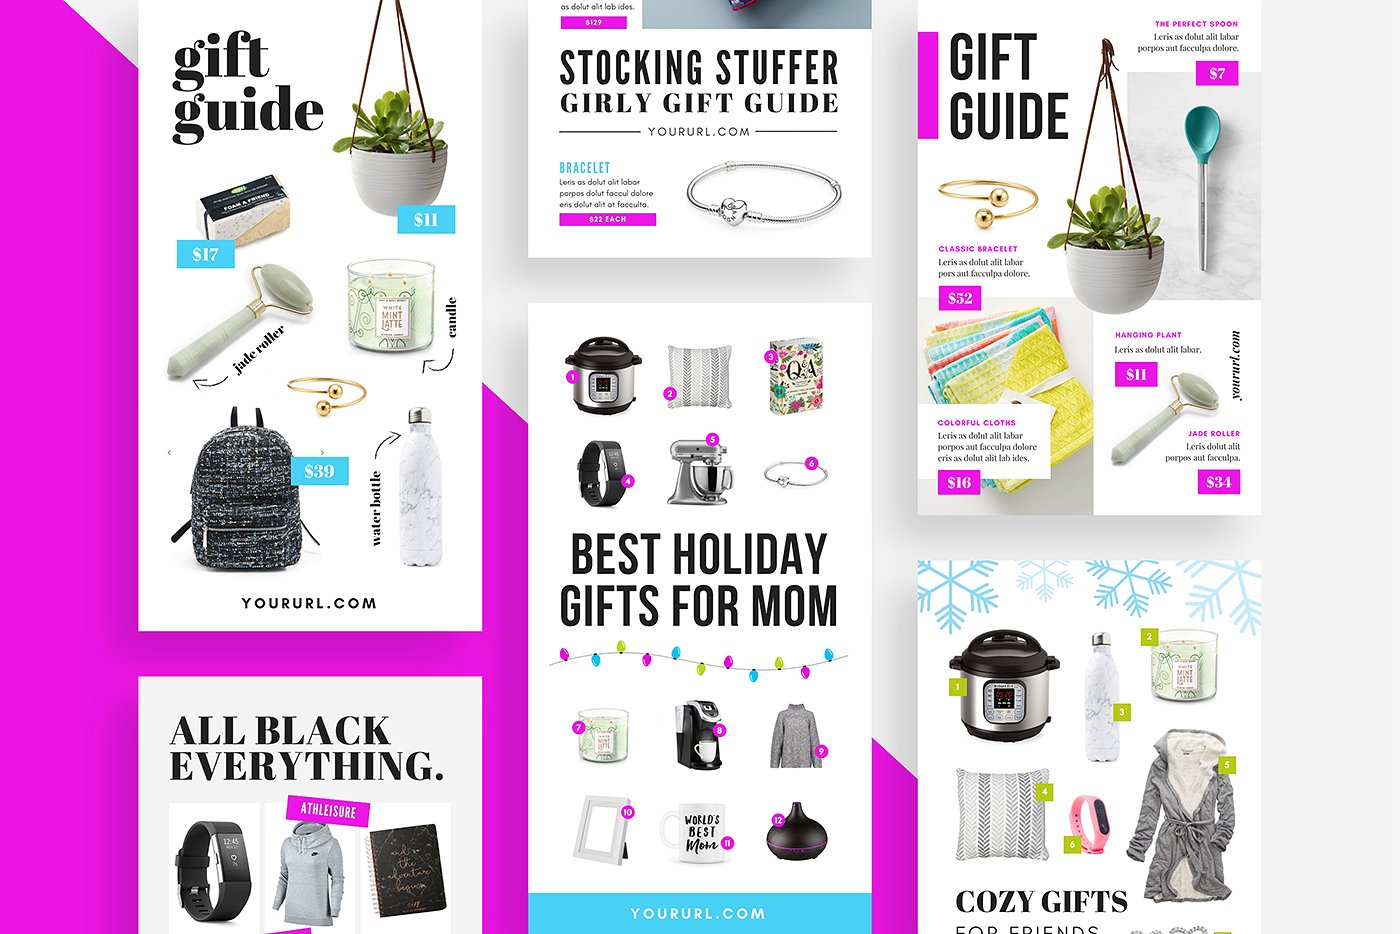 礼品指南社交媒体模板素材库精选 Gift Guide Pinterest Templates [psd]插图(3)